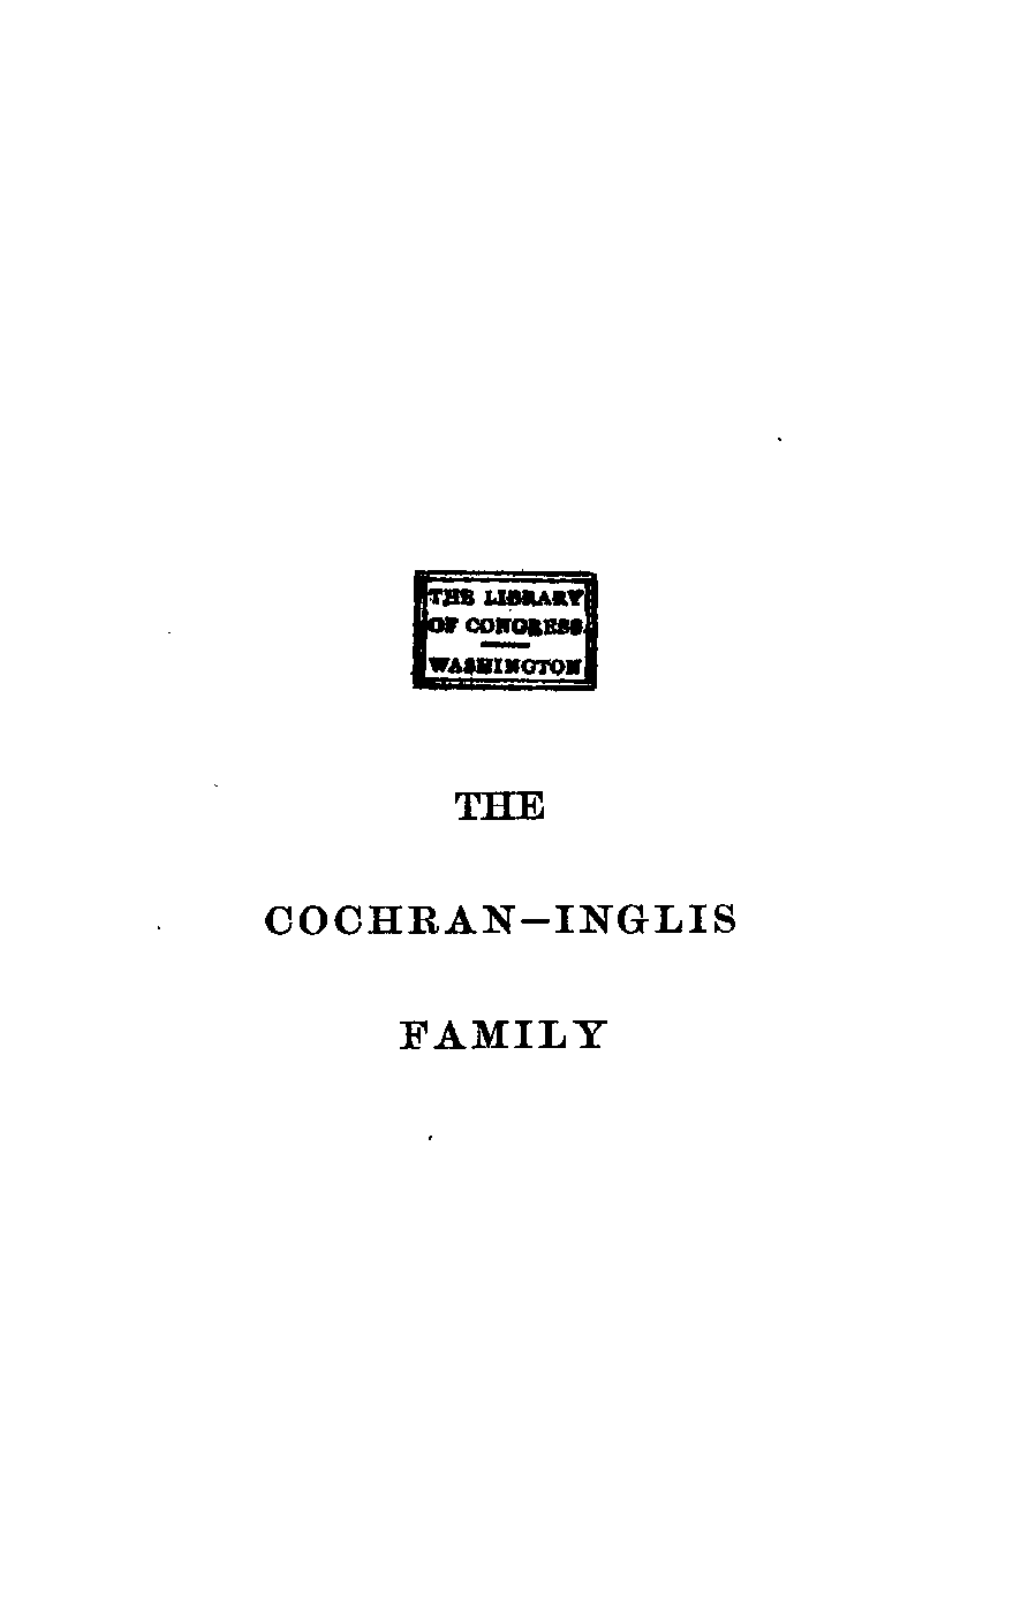 The Cochran-Inglis Family of Halifax